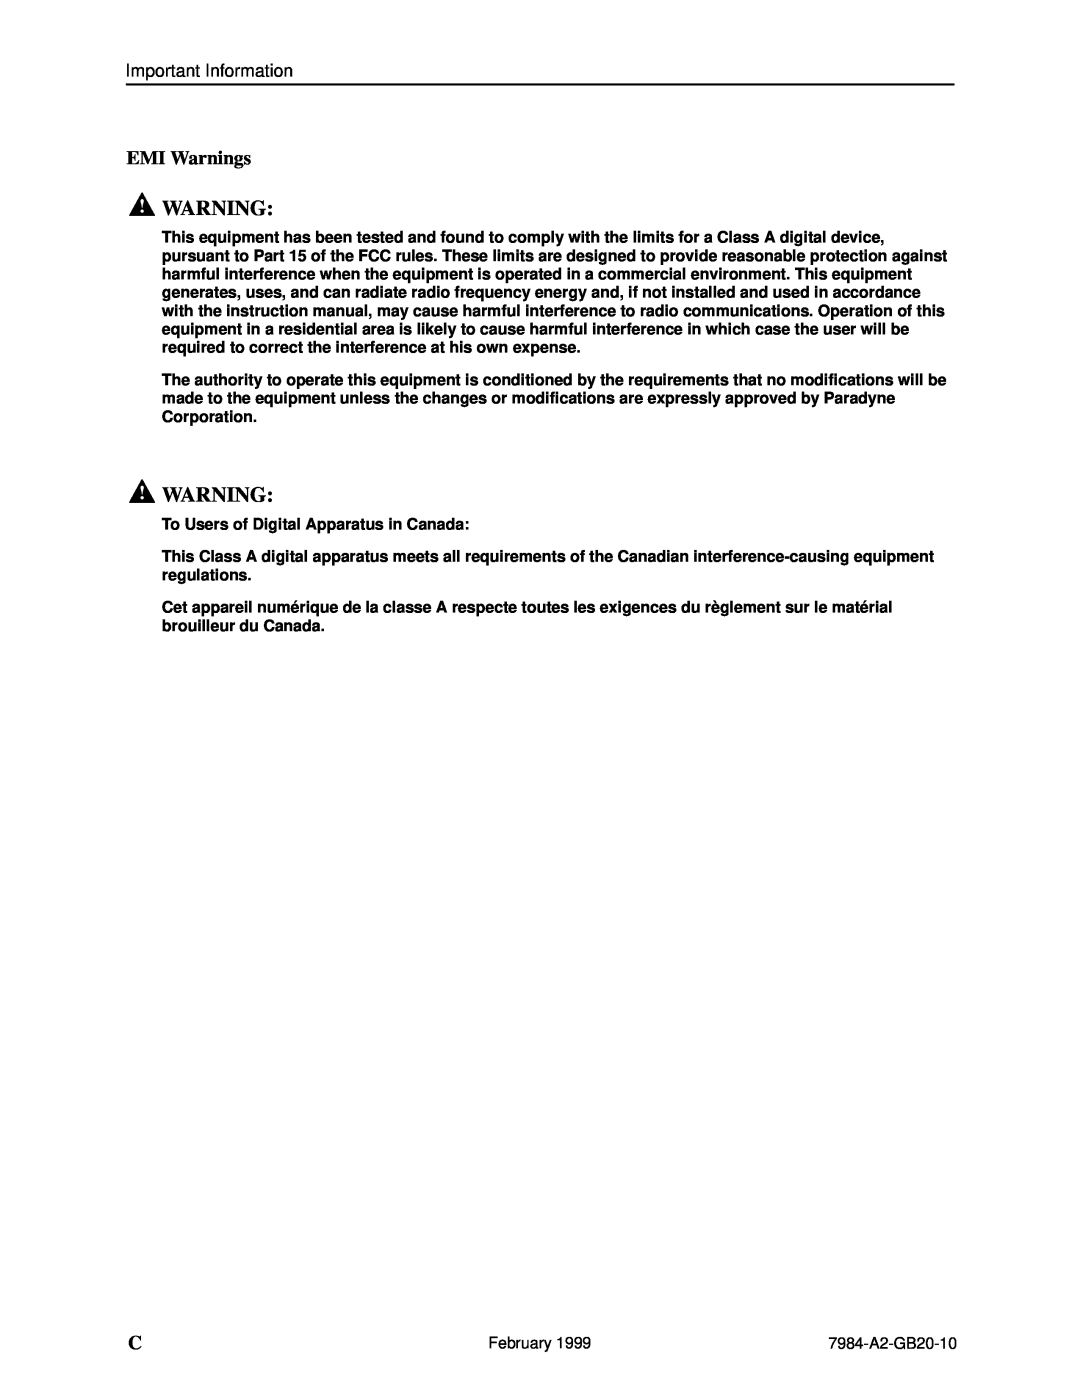 Paradyne Hotwire 7984 manual EMI Warnings, To Users of Digital Apparatus in Canada 